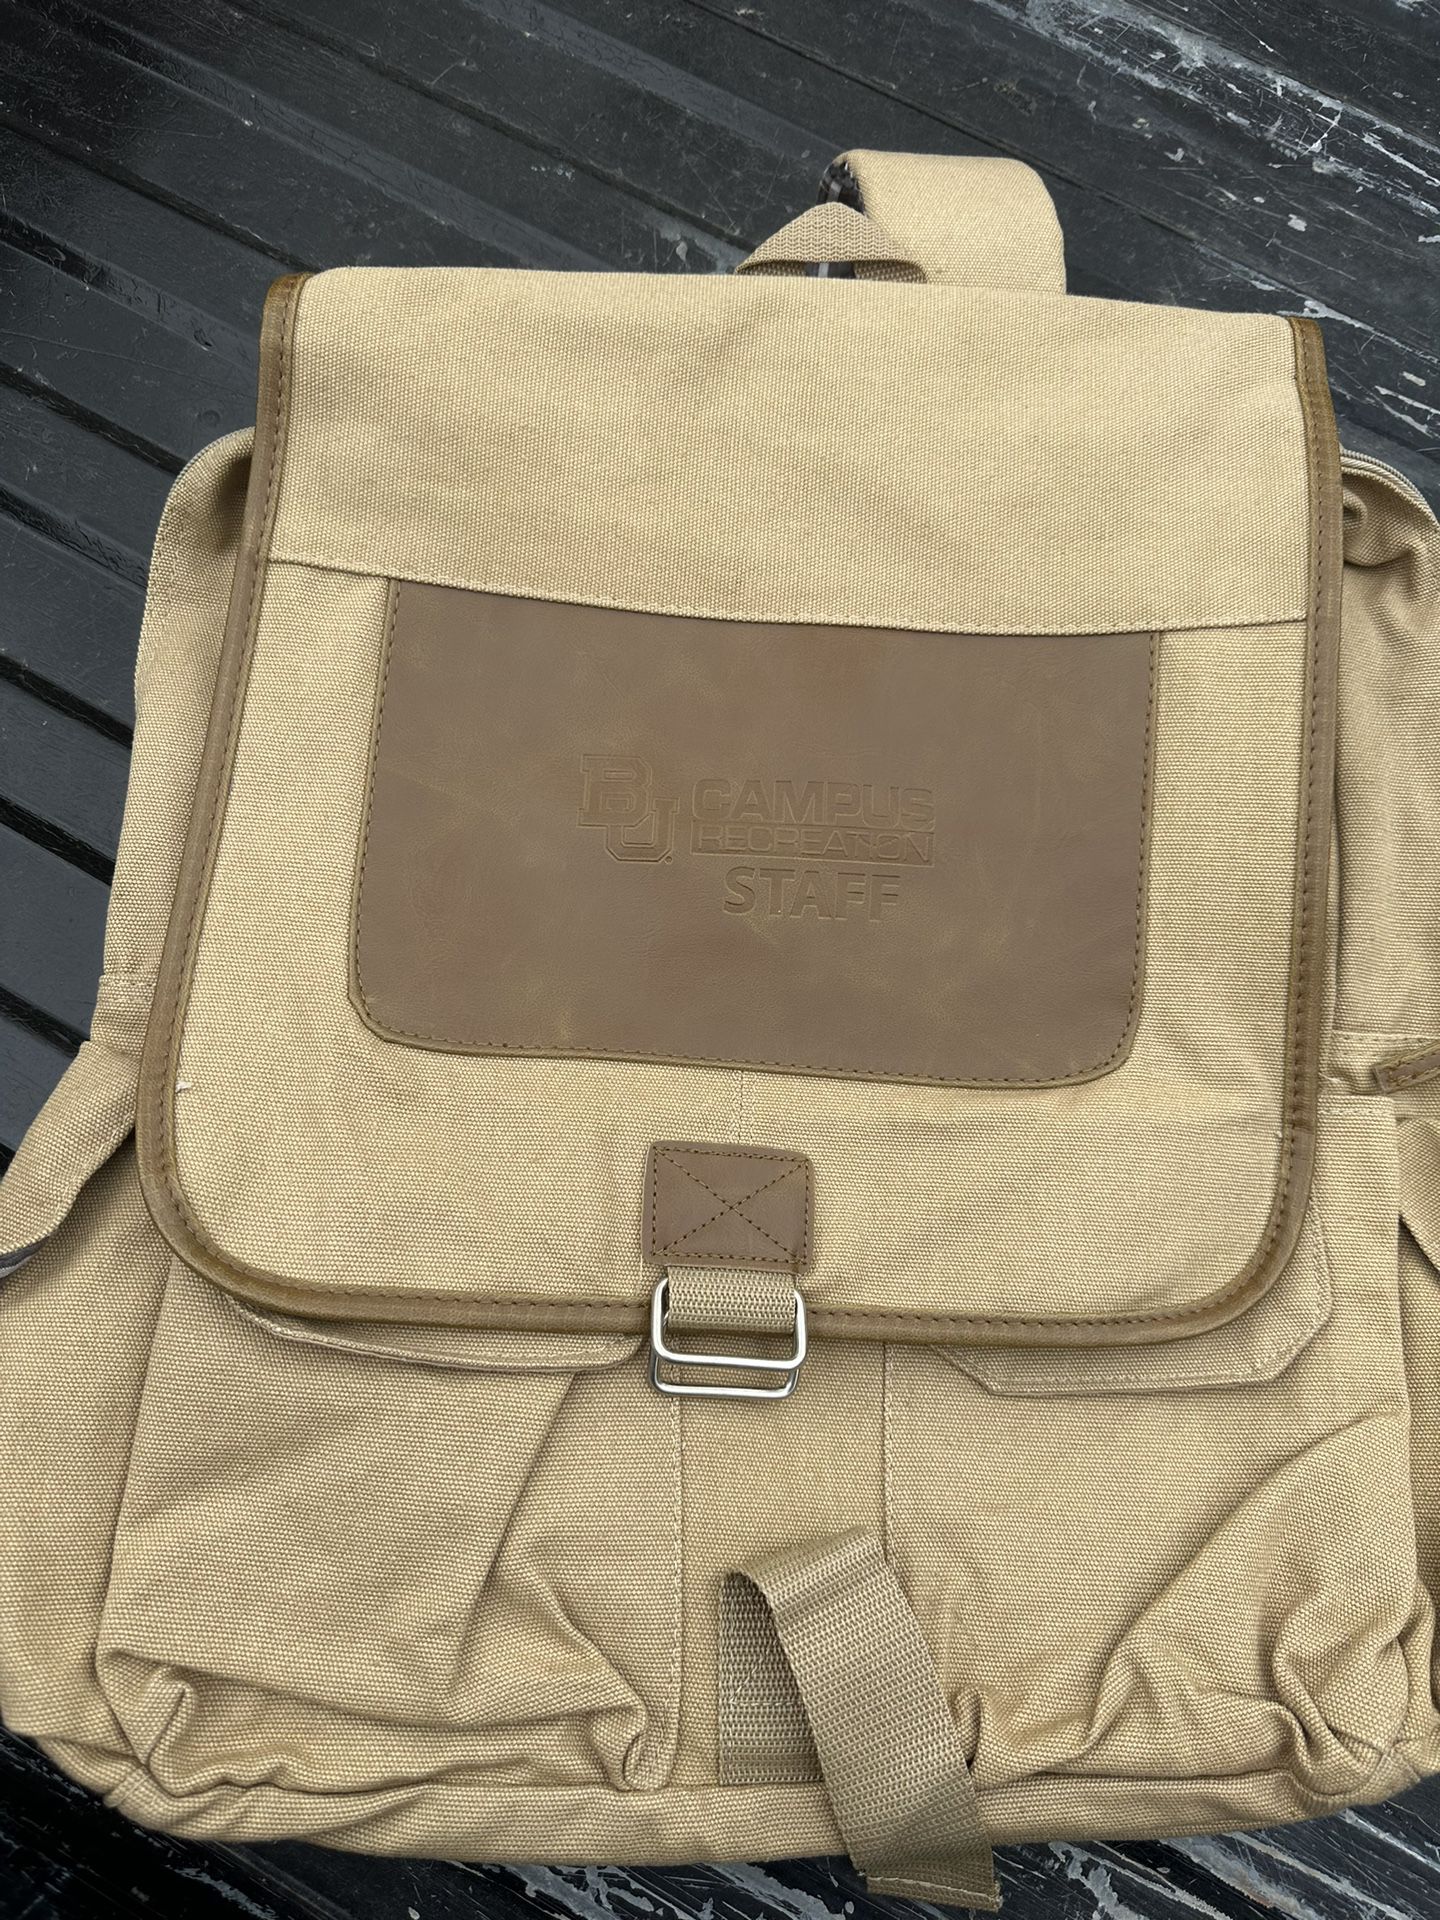 Baylor Tan School Bag